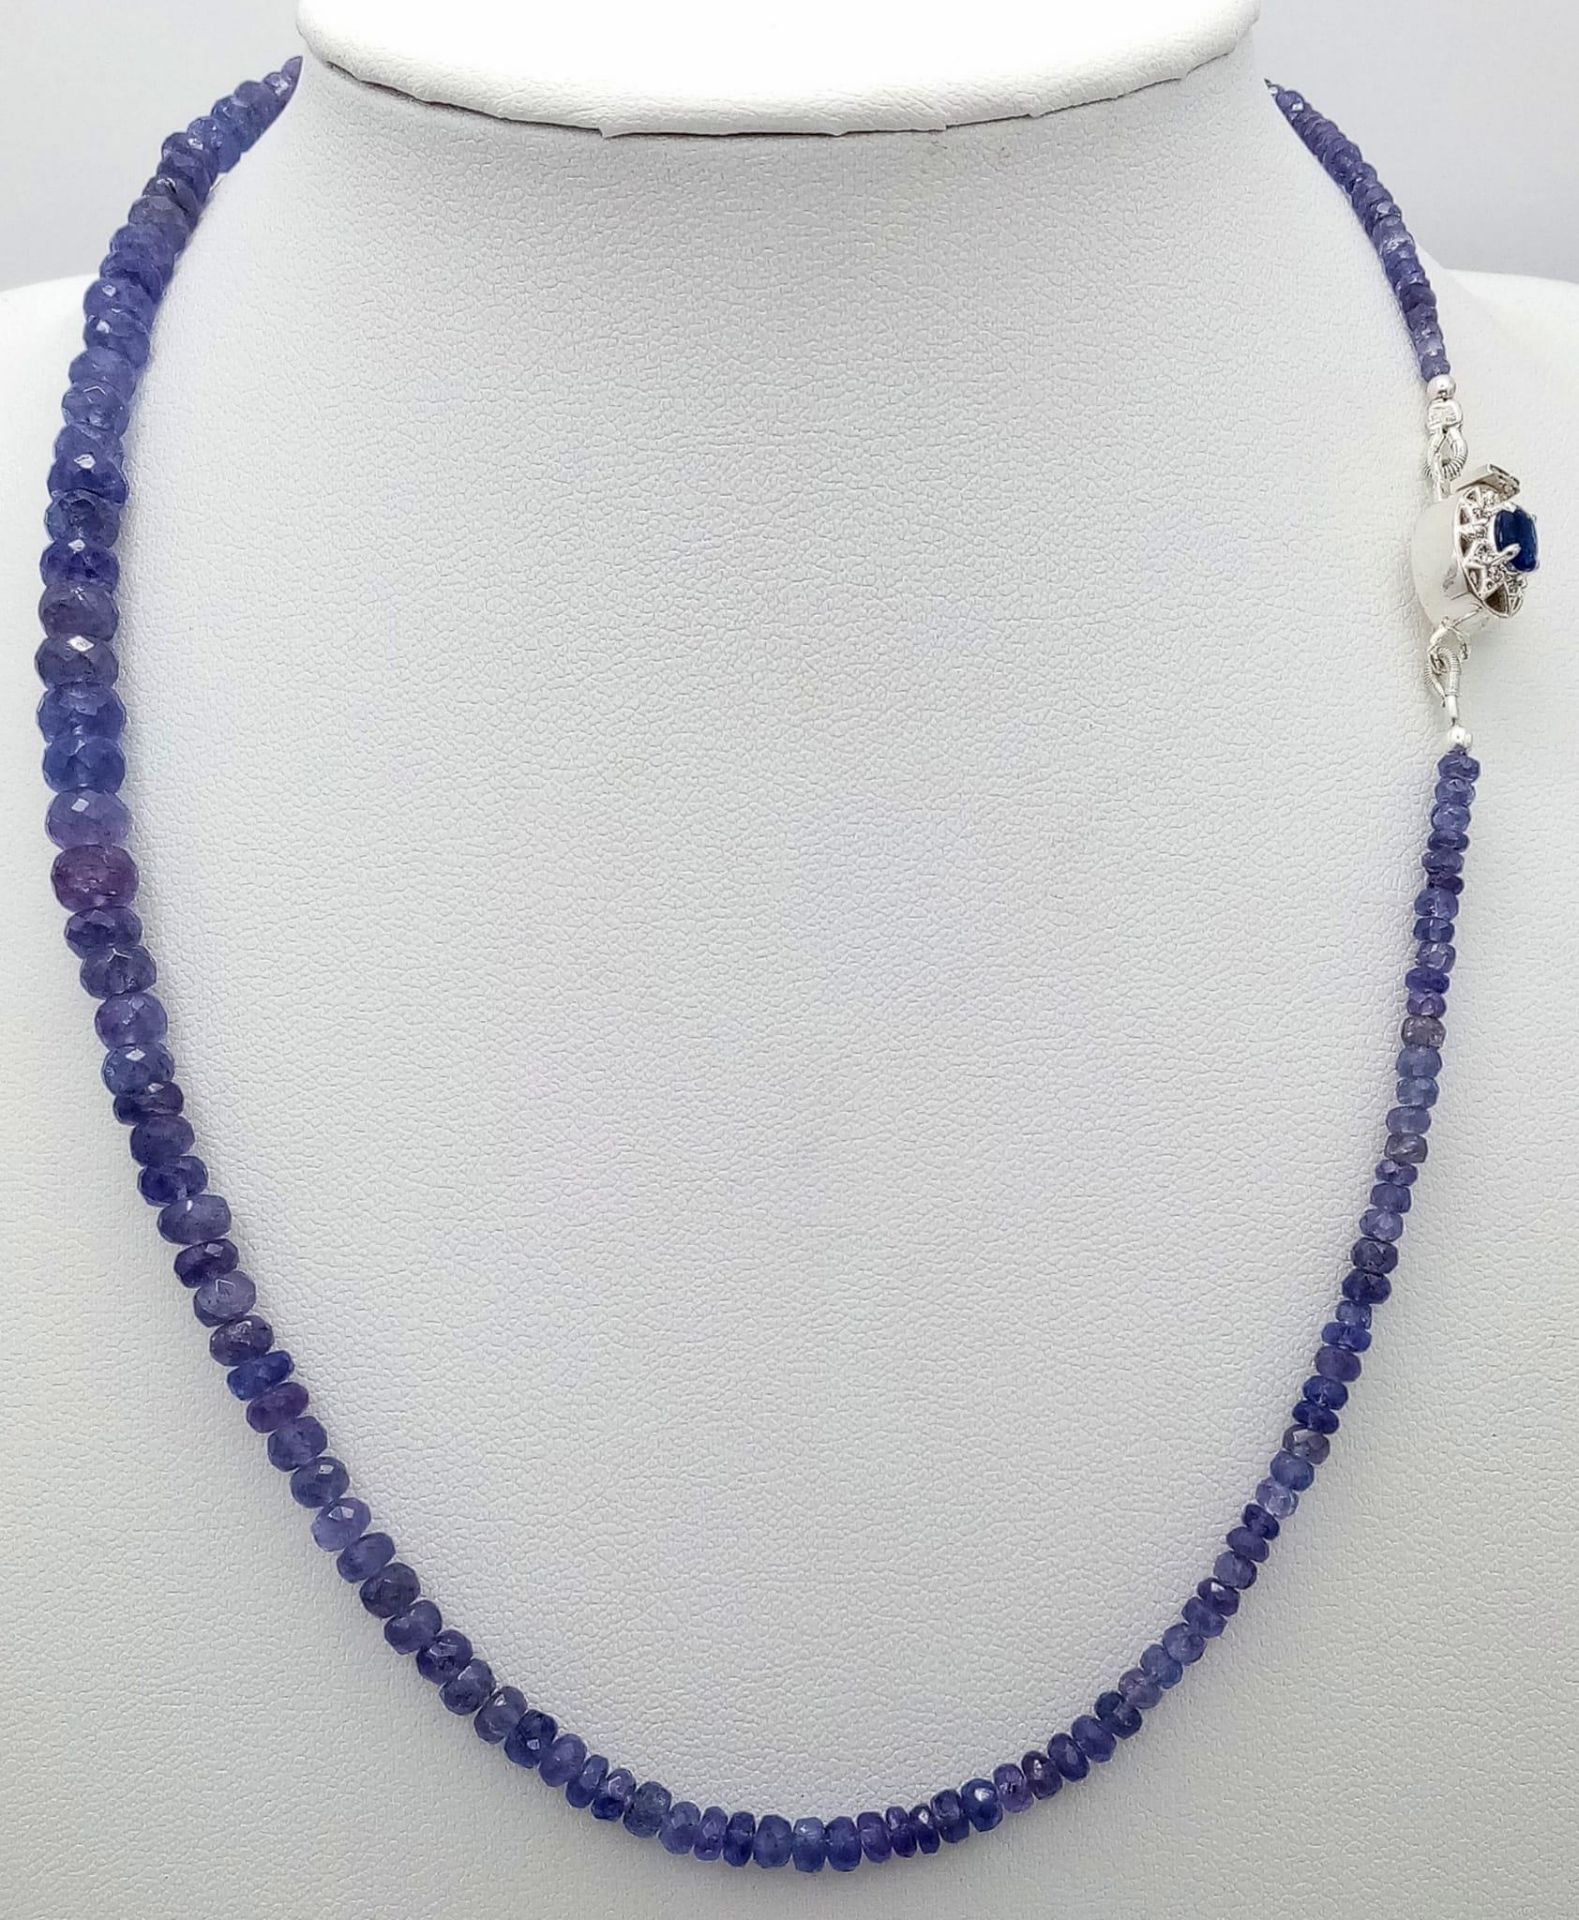 A 75ctw Tanzanite Gemstone Single Strand Necklace with Sapphire and Diamond Clasp. 42cm length.